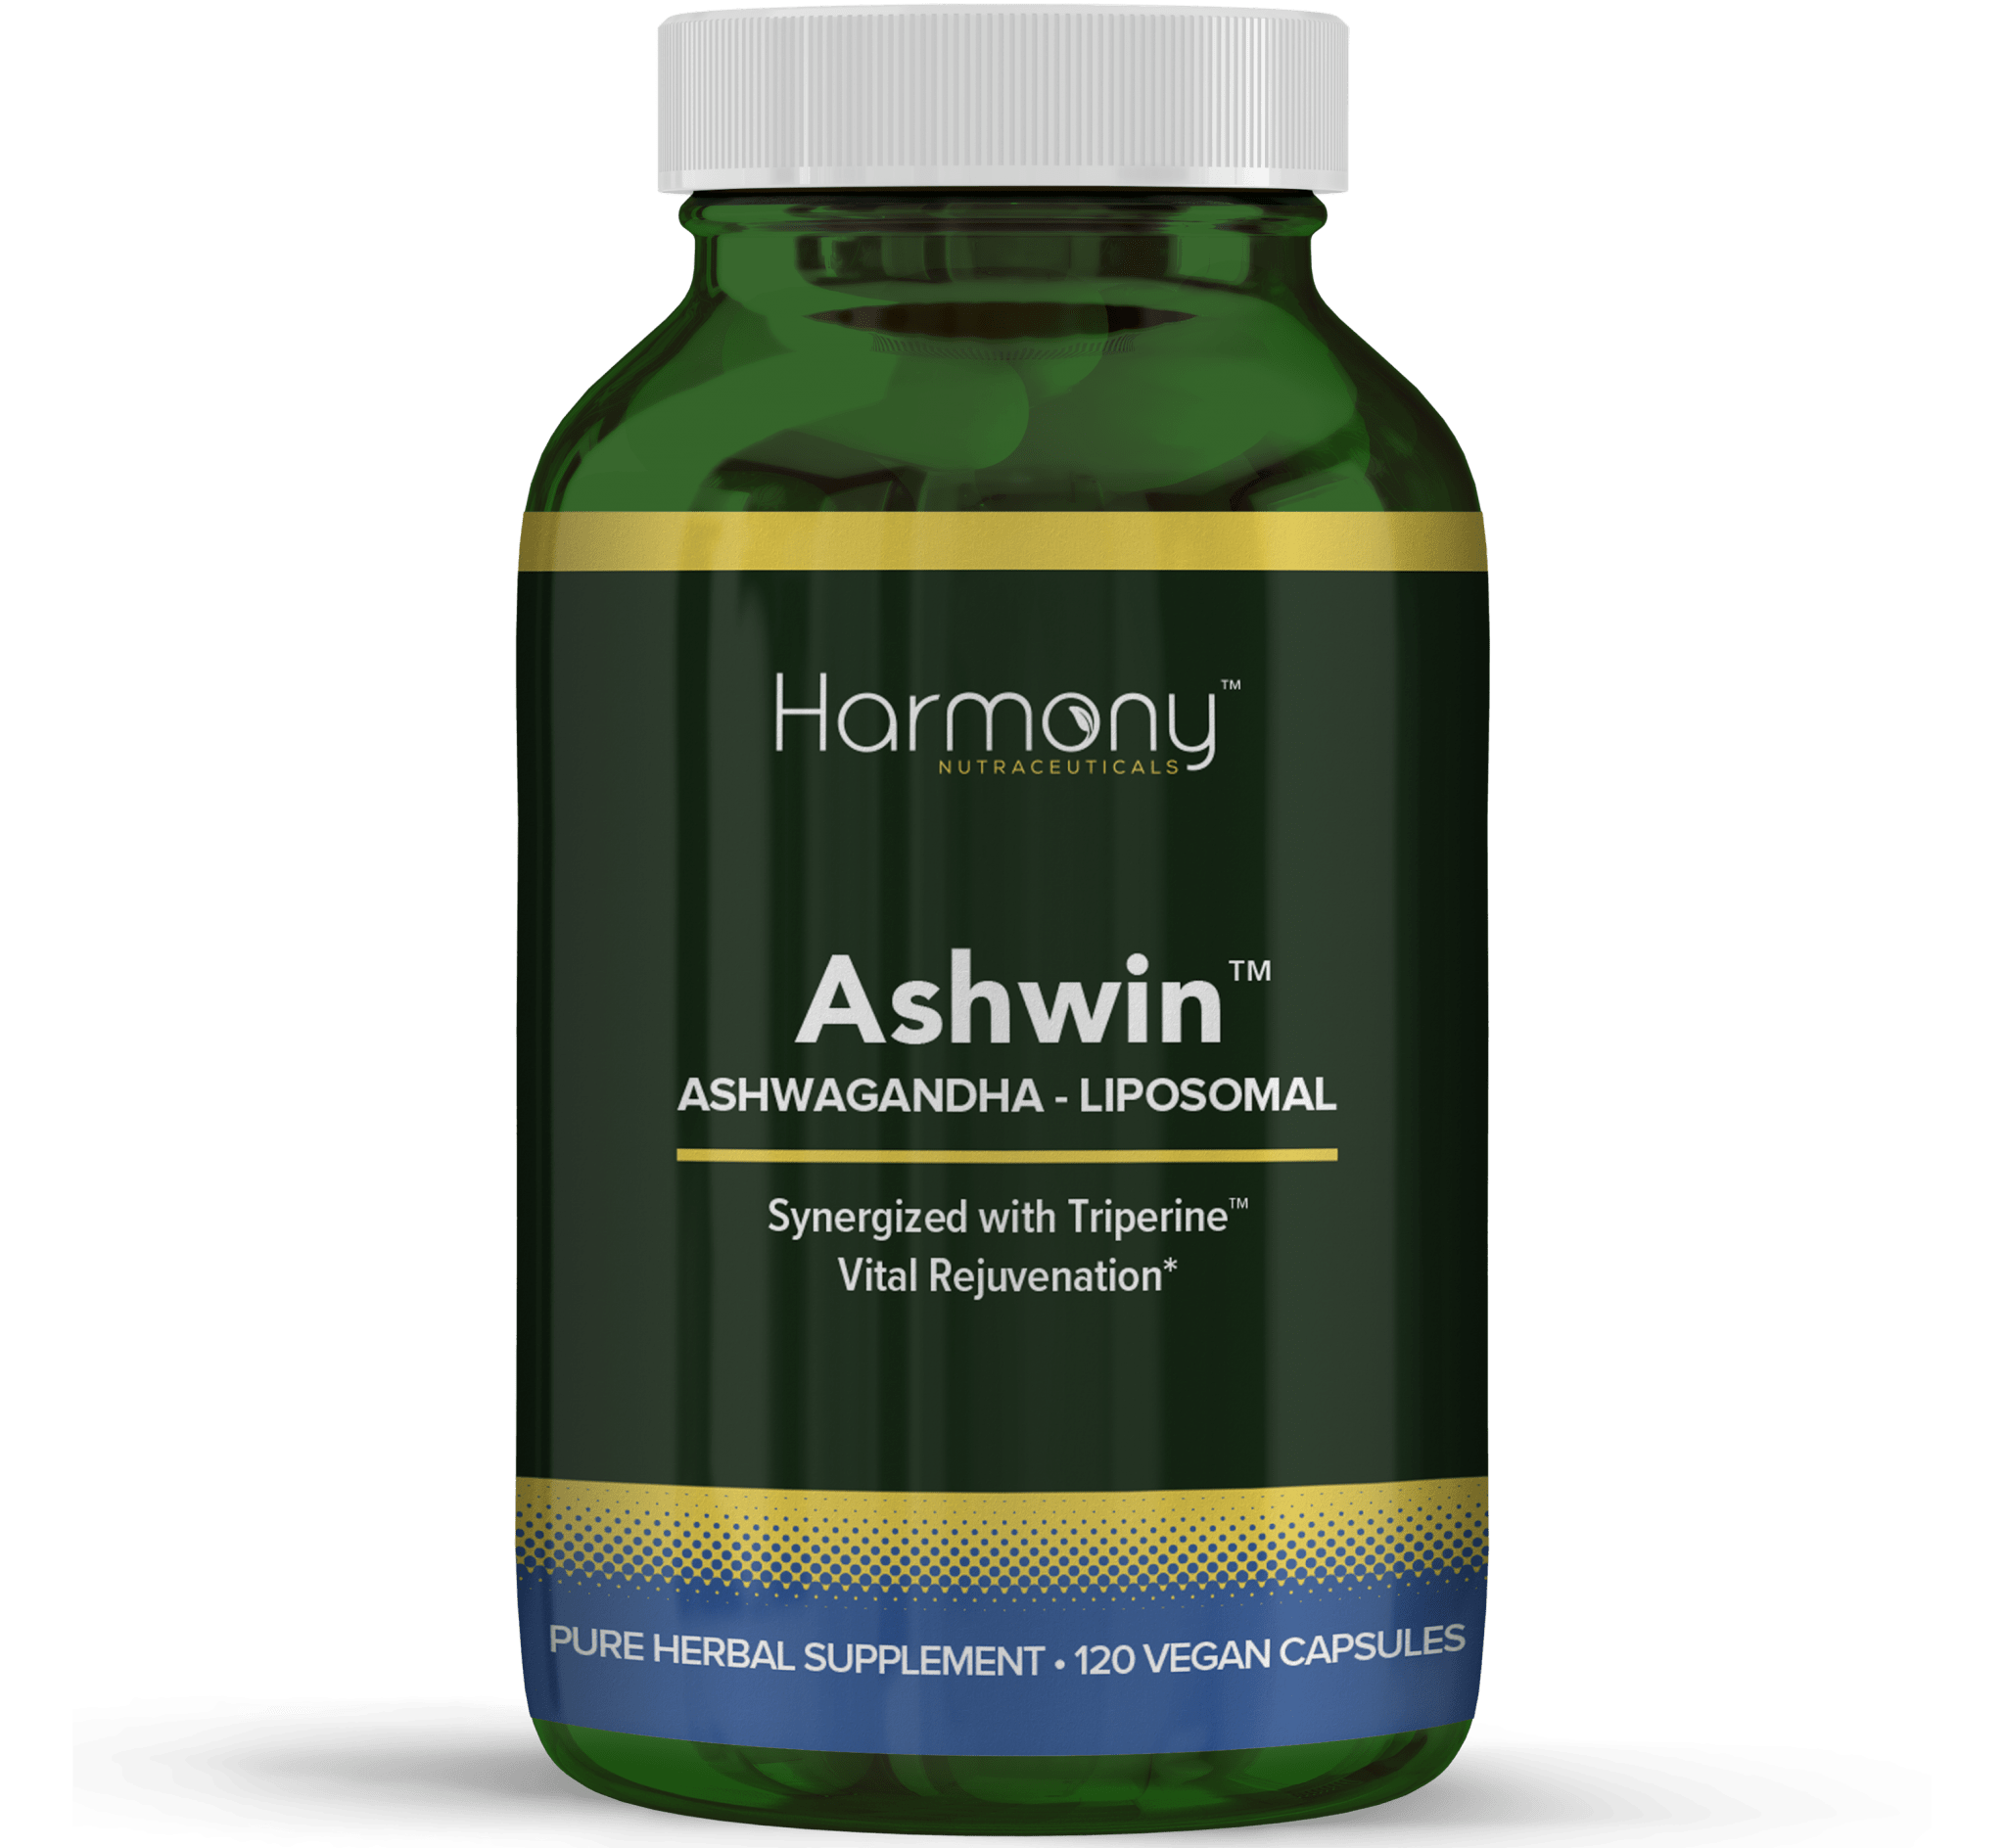 Ashwin Ashwagandha - Liposomal Pure Herbal Supplement from Harmony Veda